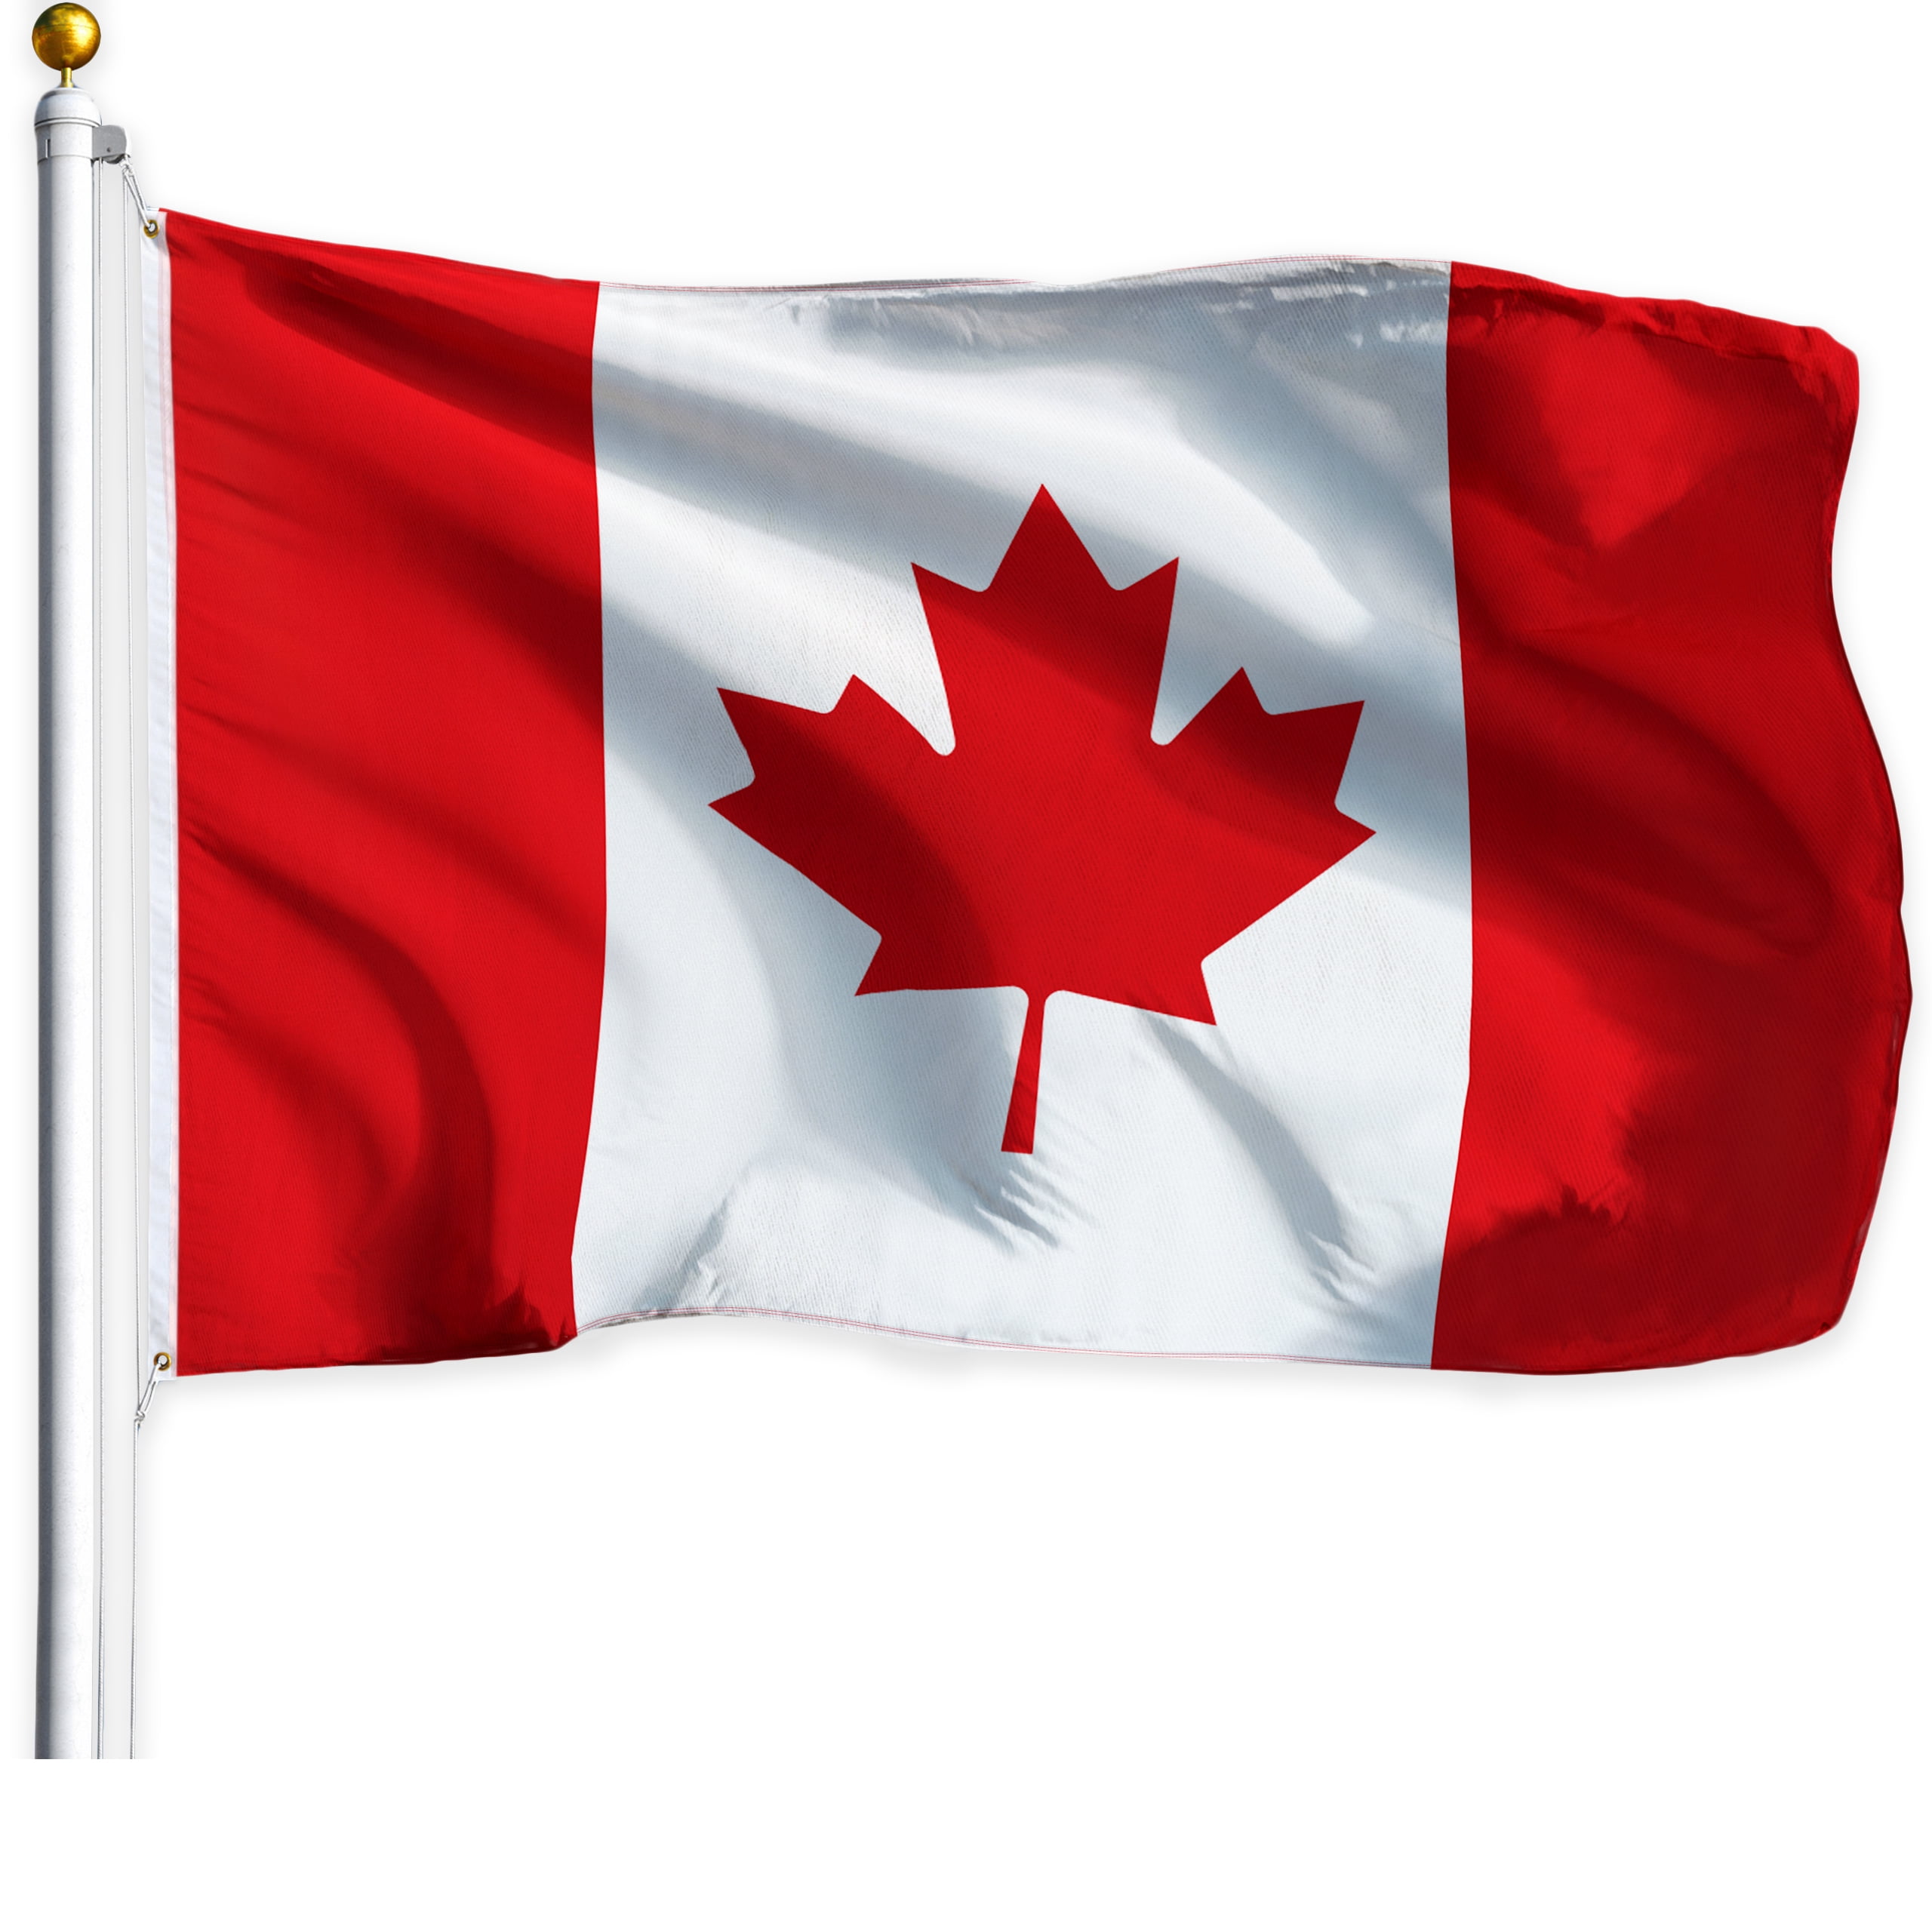 Ceiling Fan Blade FABRIC Cover CANADIAN FLAG Canada maple leaf 5 decorative pcs 